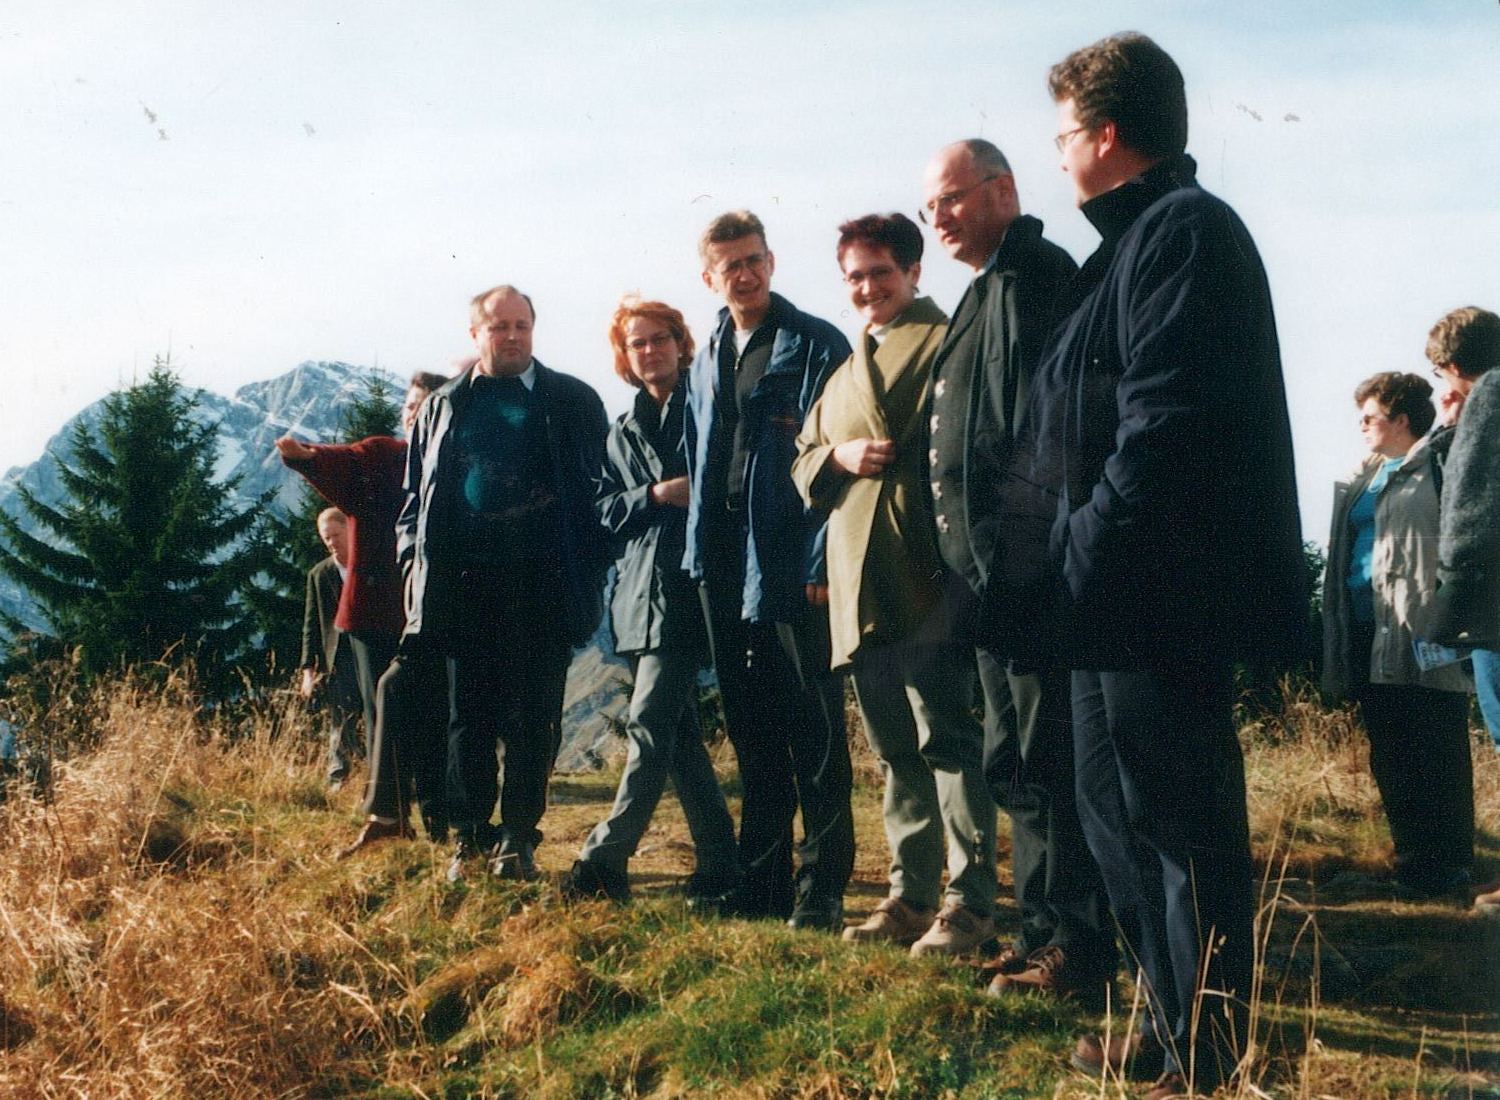 Musikausflug zum Königssee 1999